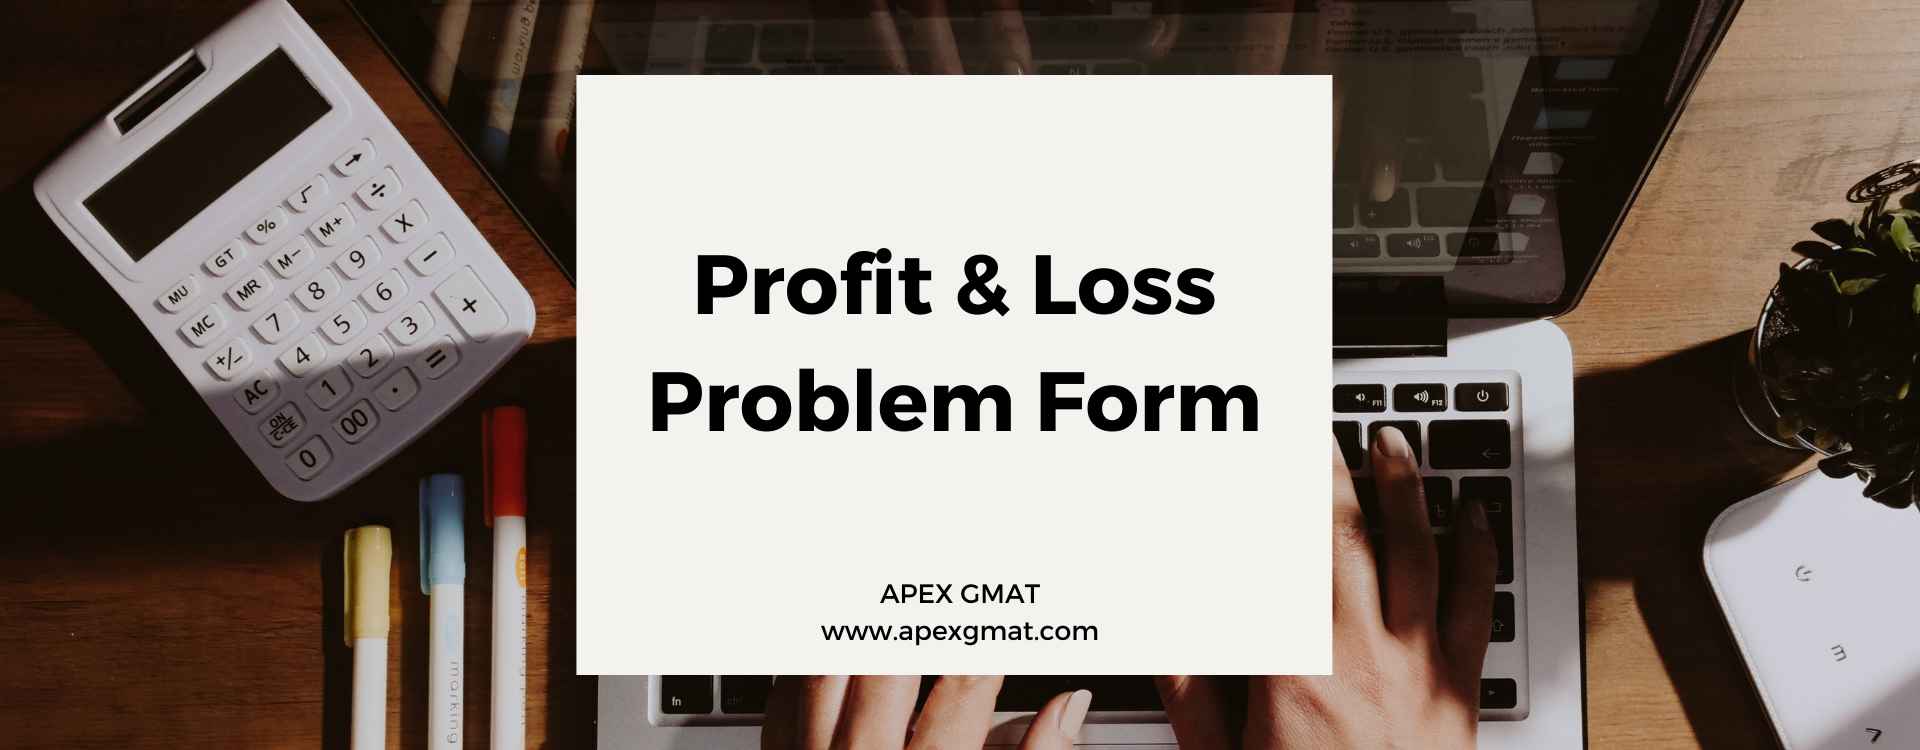 Profit & Loss Problem Form